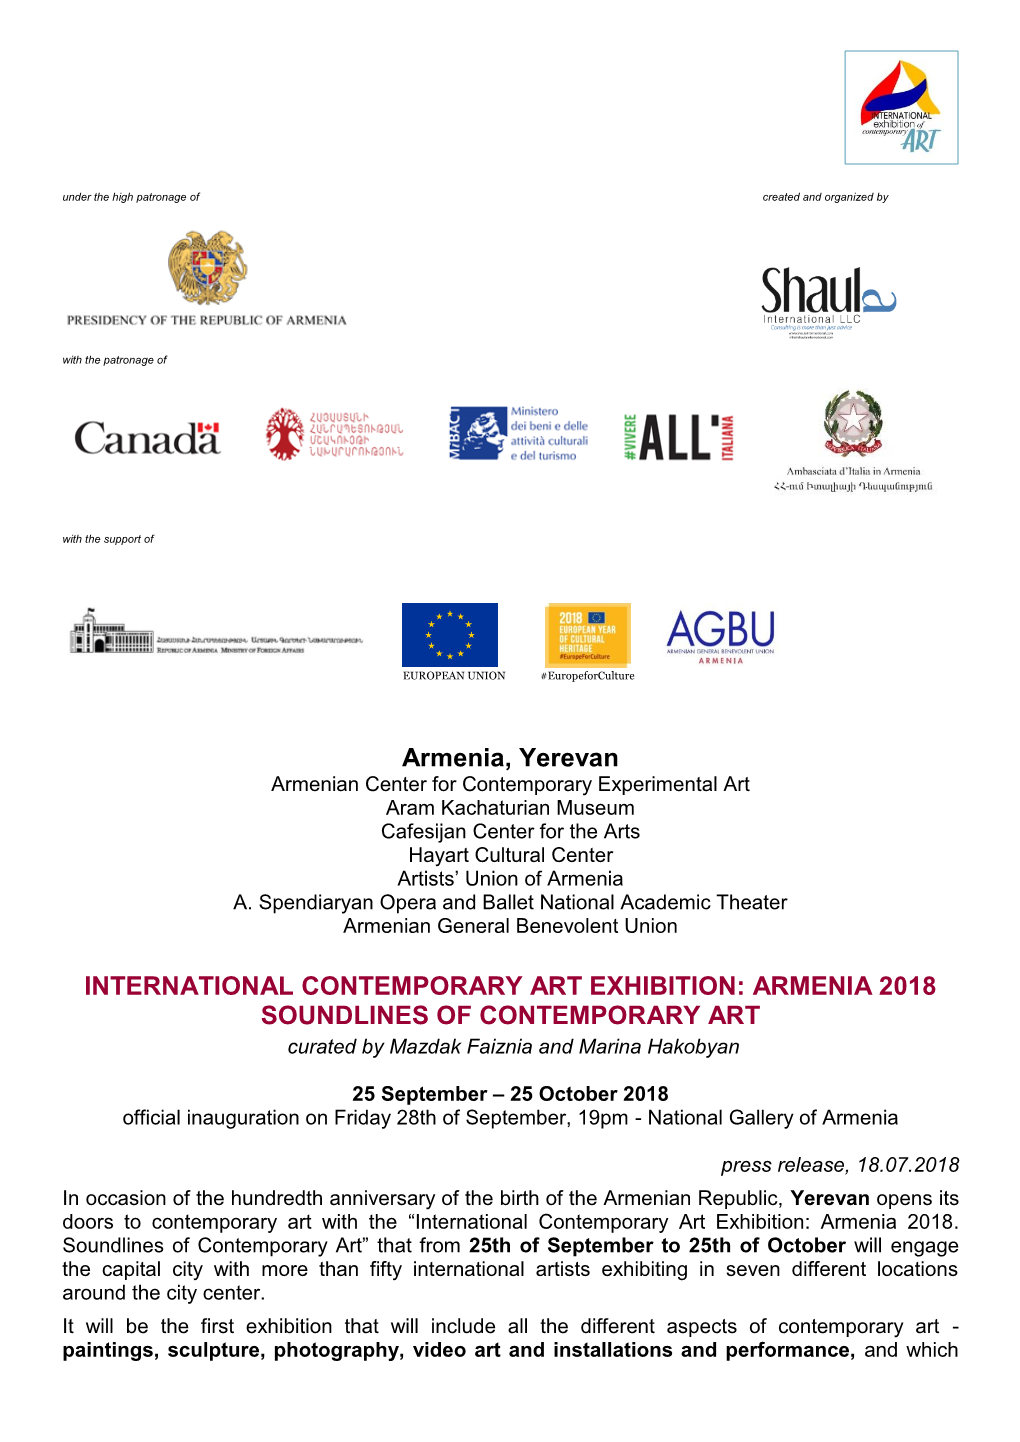 ARMENIA 2018 SOUNDLINES of CONTEMPORARY ART Curated by Mazdak Faiznia and Marina Hakobyan